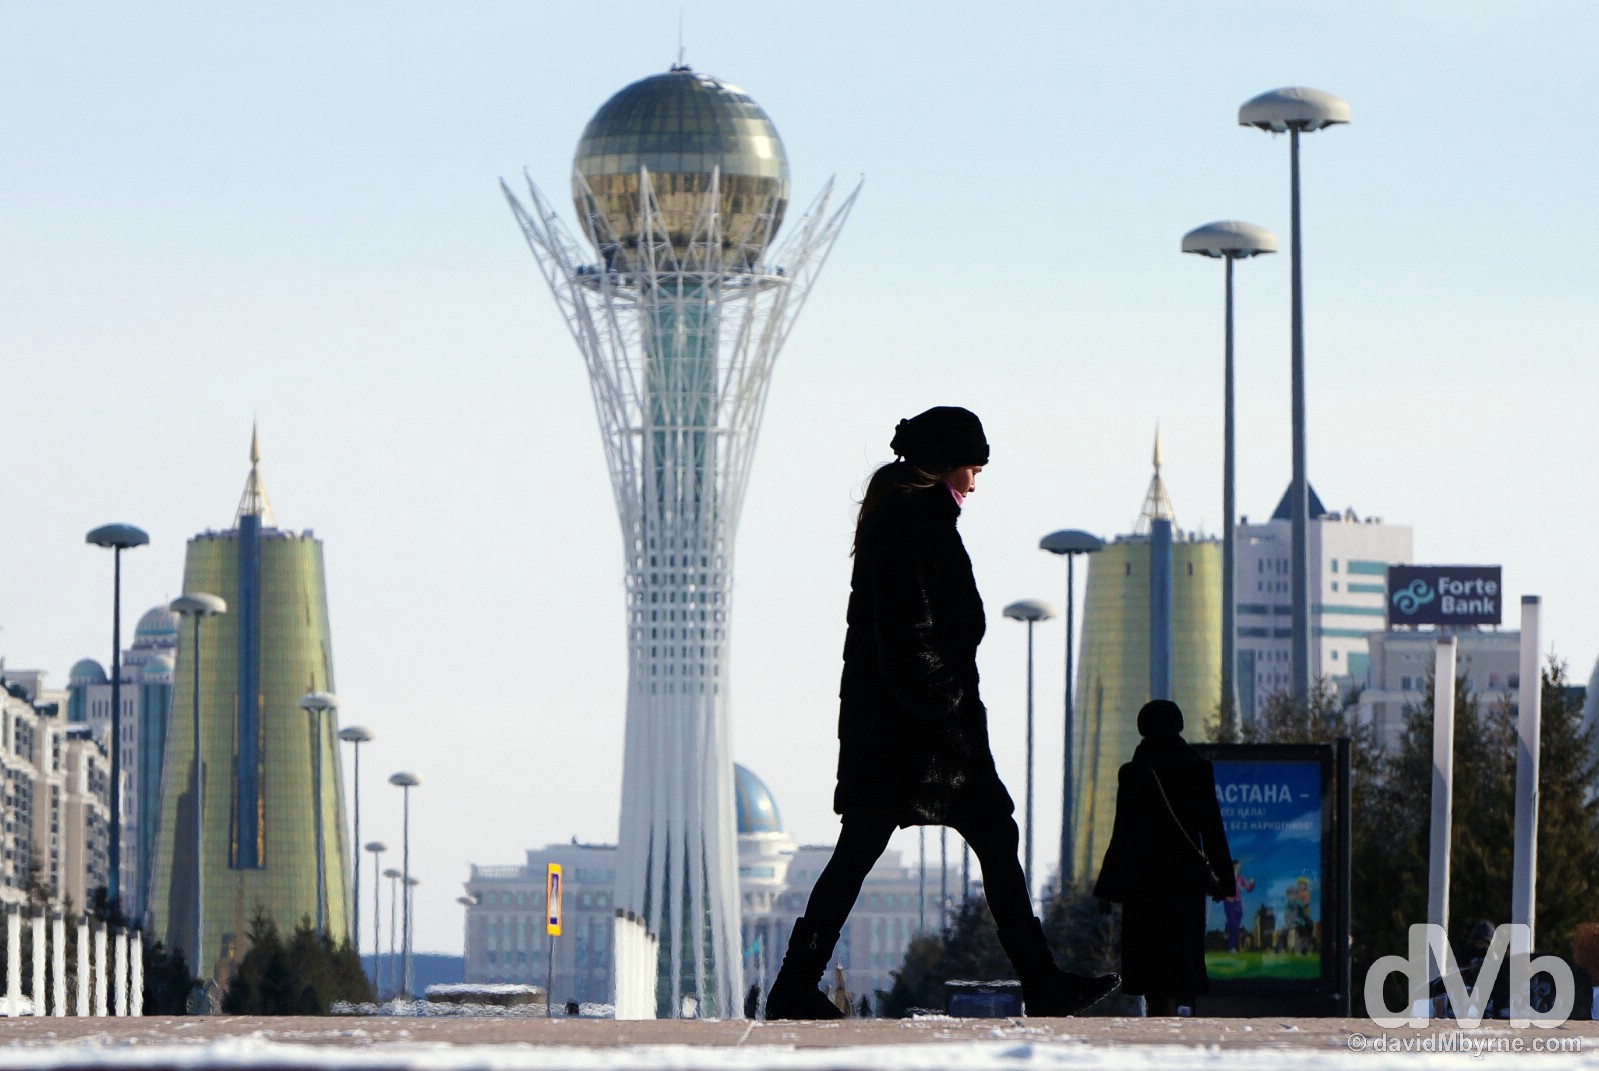 Looking east up Nurzhol Bulvar, the 2 kilometer long governmental & monumental zone in Astana, Kazakhstan. February 18, 2015.